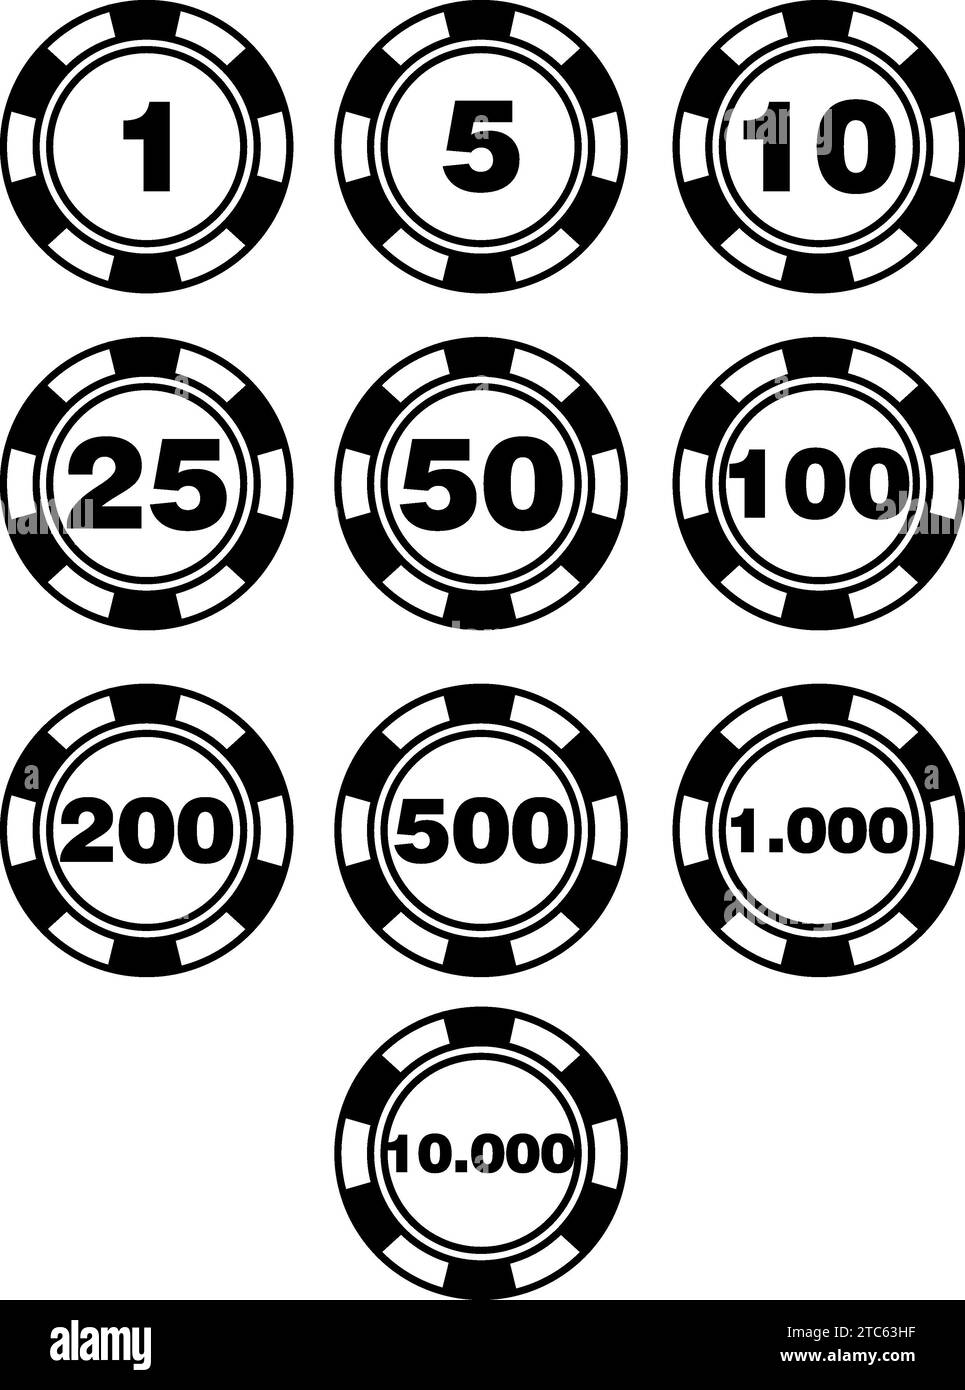 Black and white gambling chips Stock Photo